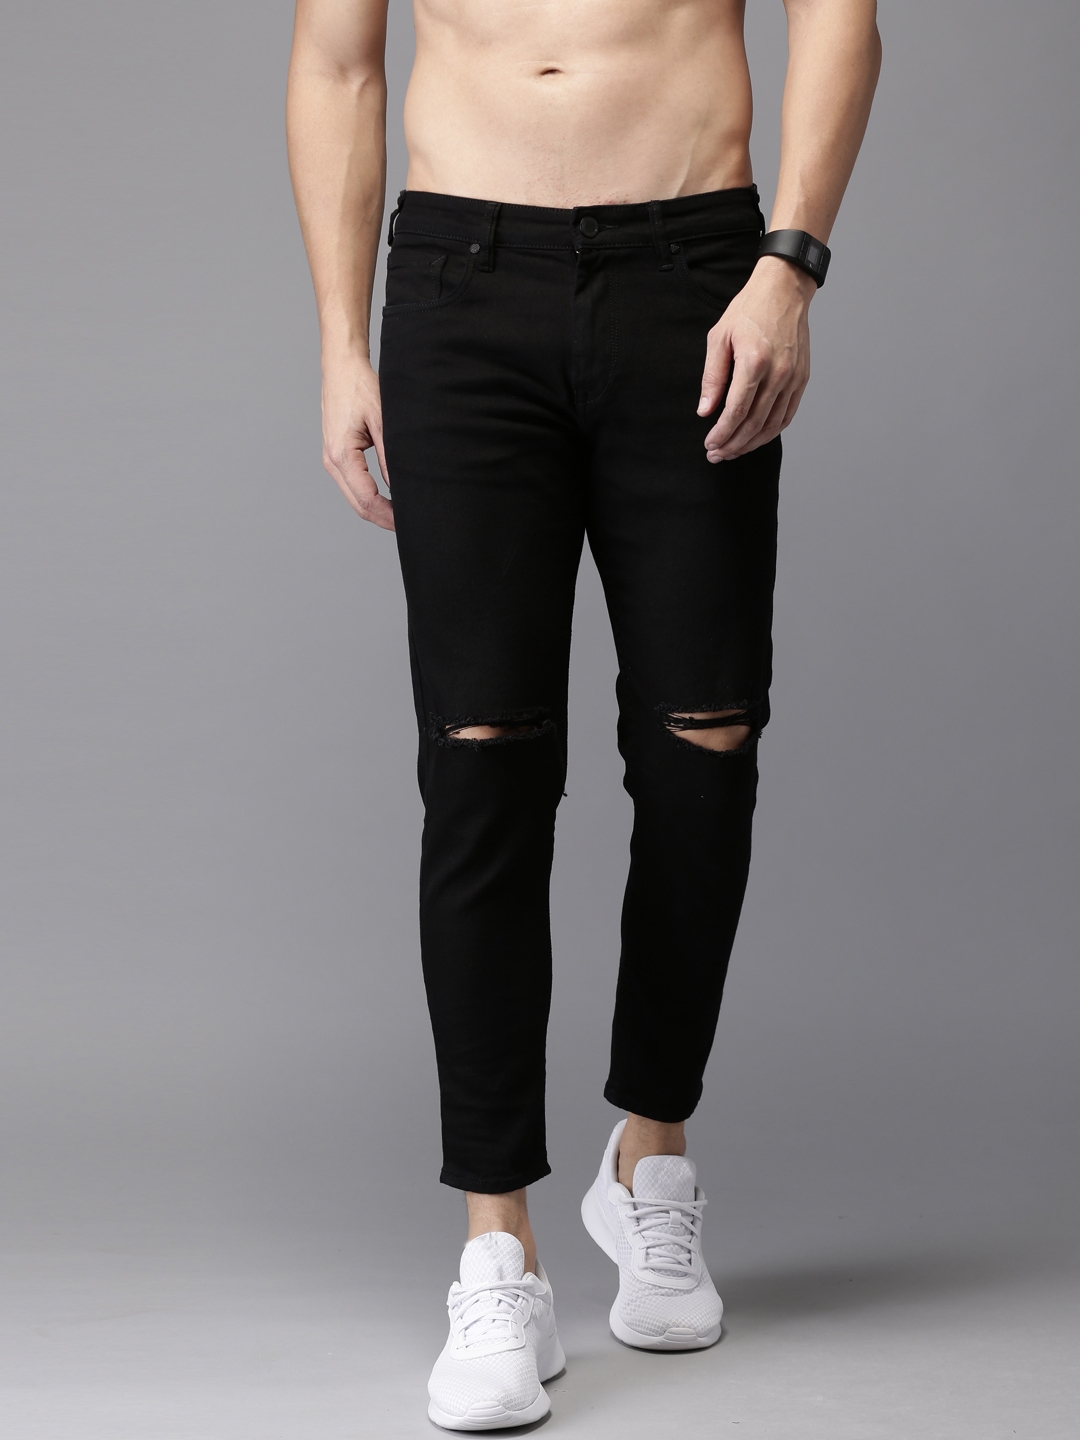 ankle length black jeans for mens